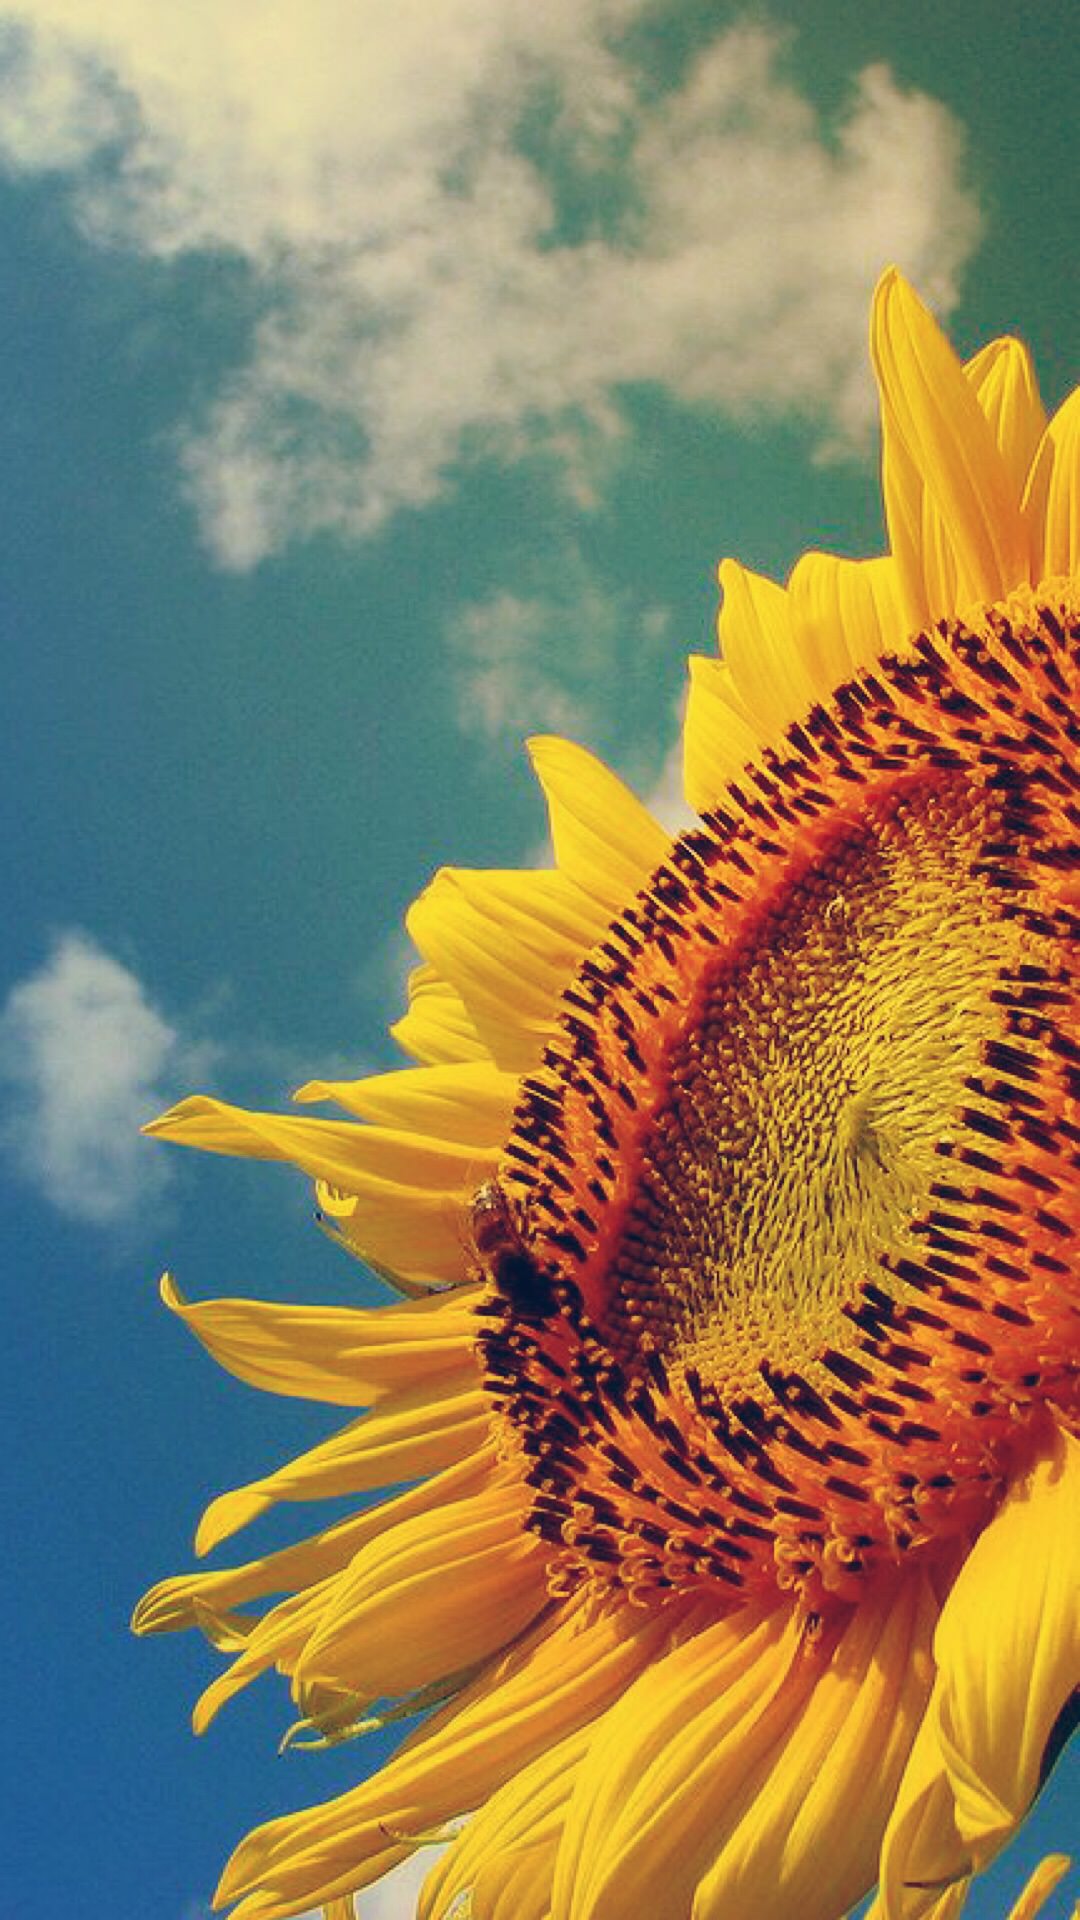 Sunflower sunflower | wallpaper.sc iPhone8Plus